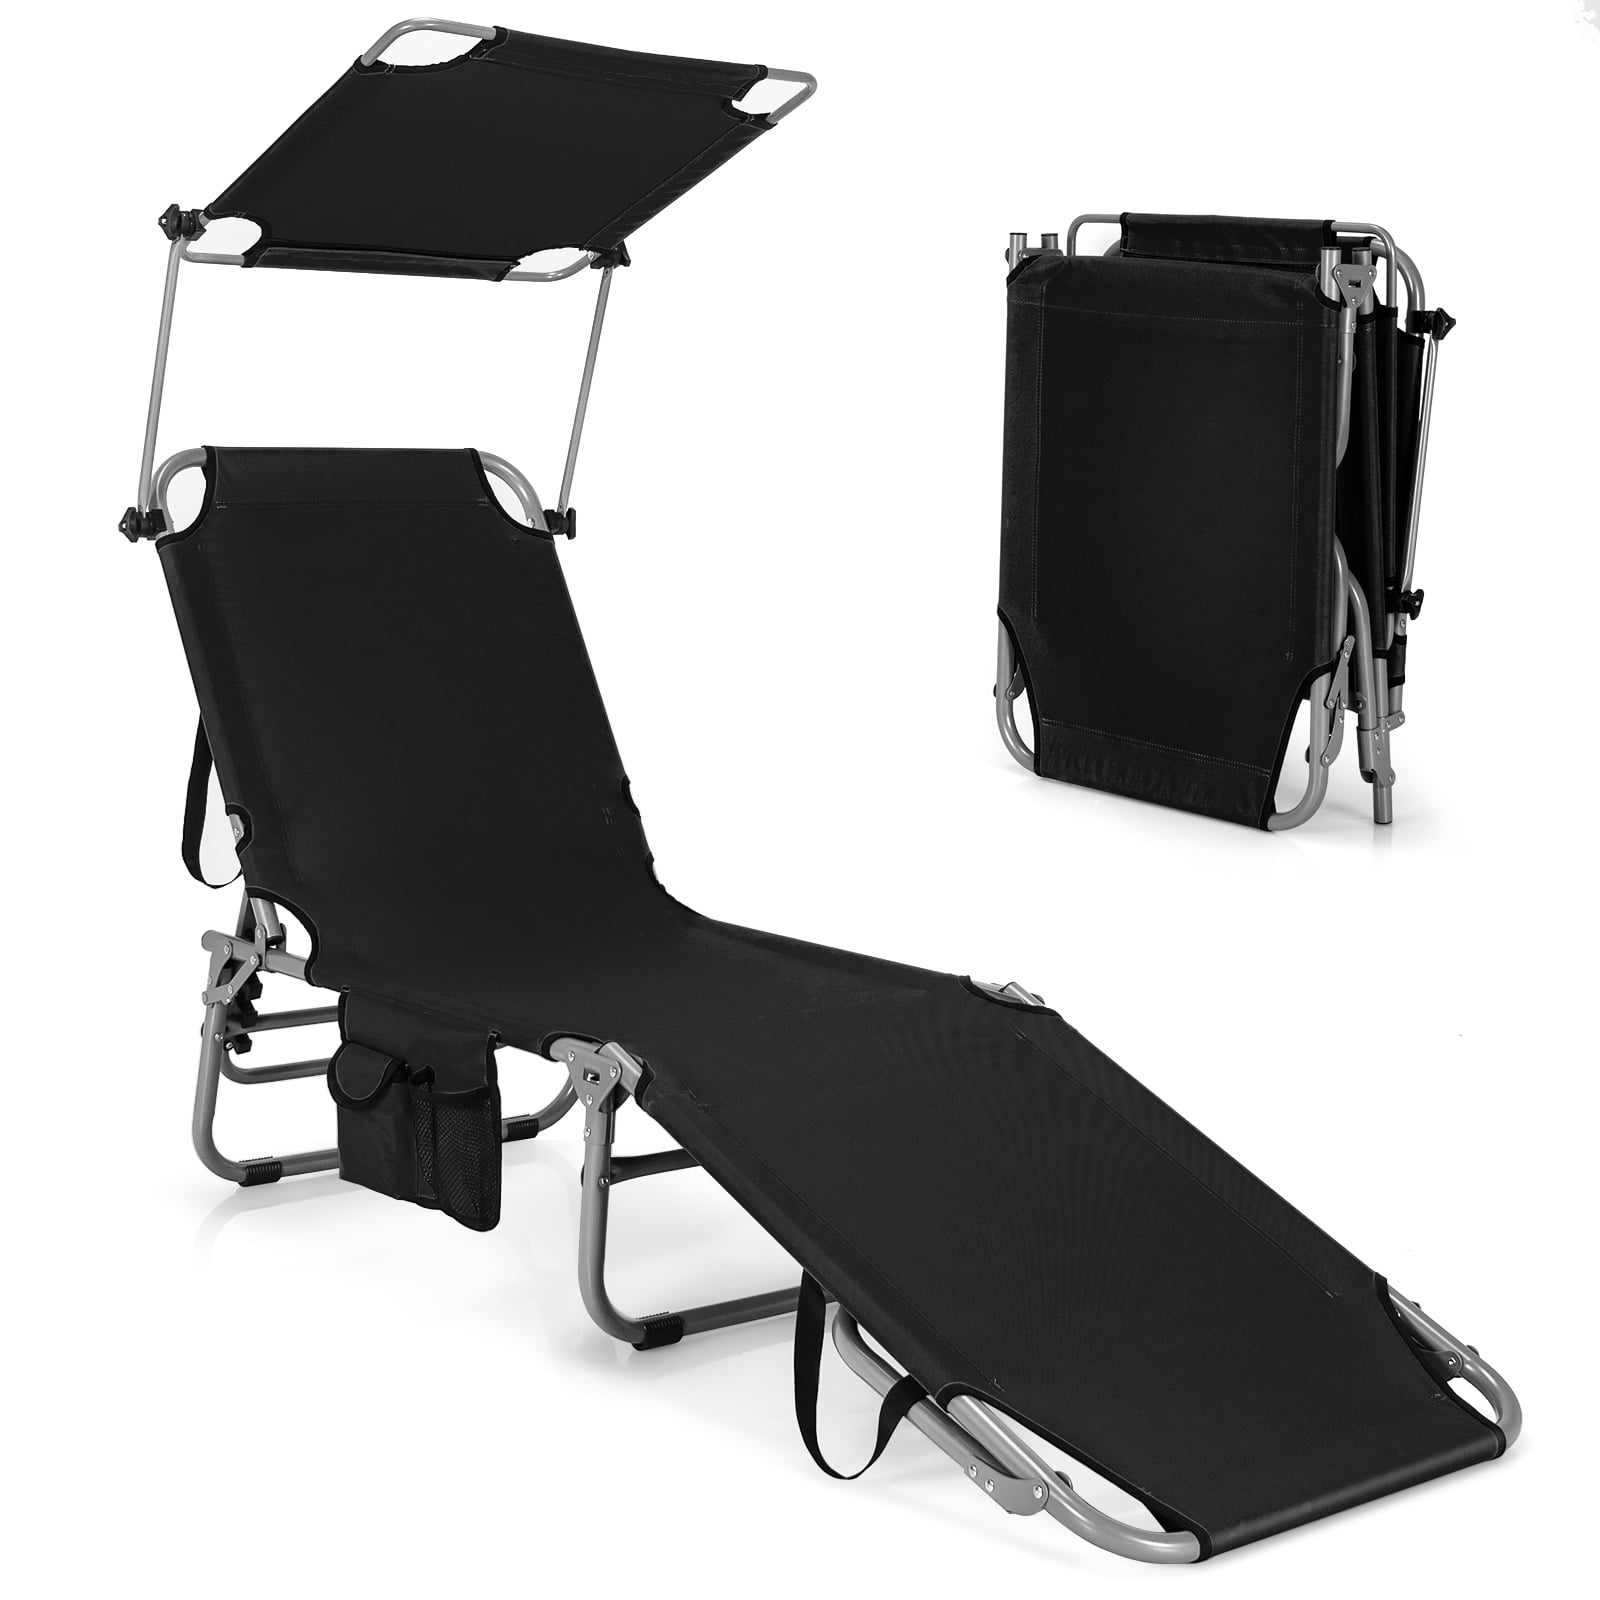 Topbuy Patio Rattan Wicker Recliner Chair Zero Gravity Folding Chaise Lounger 